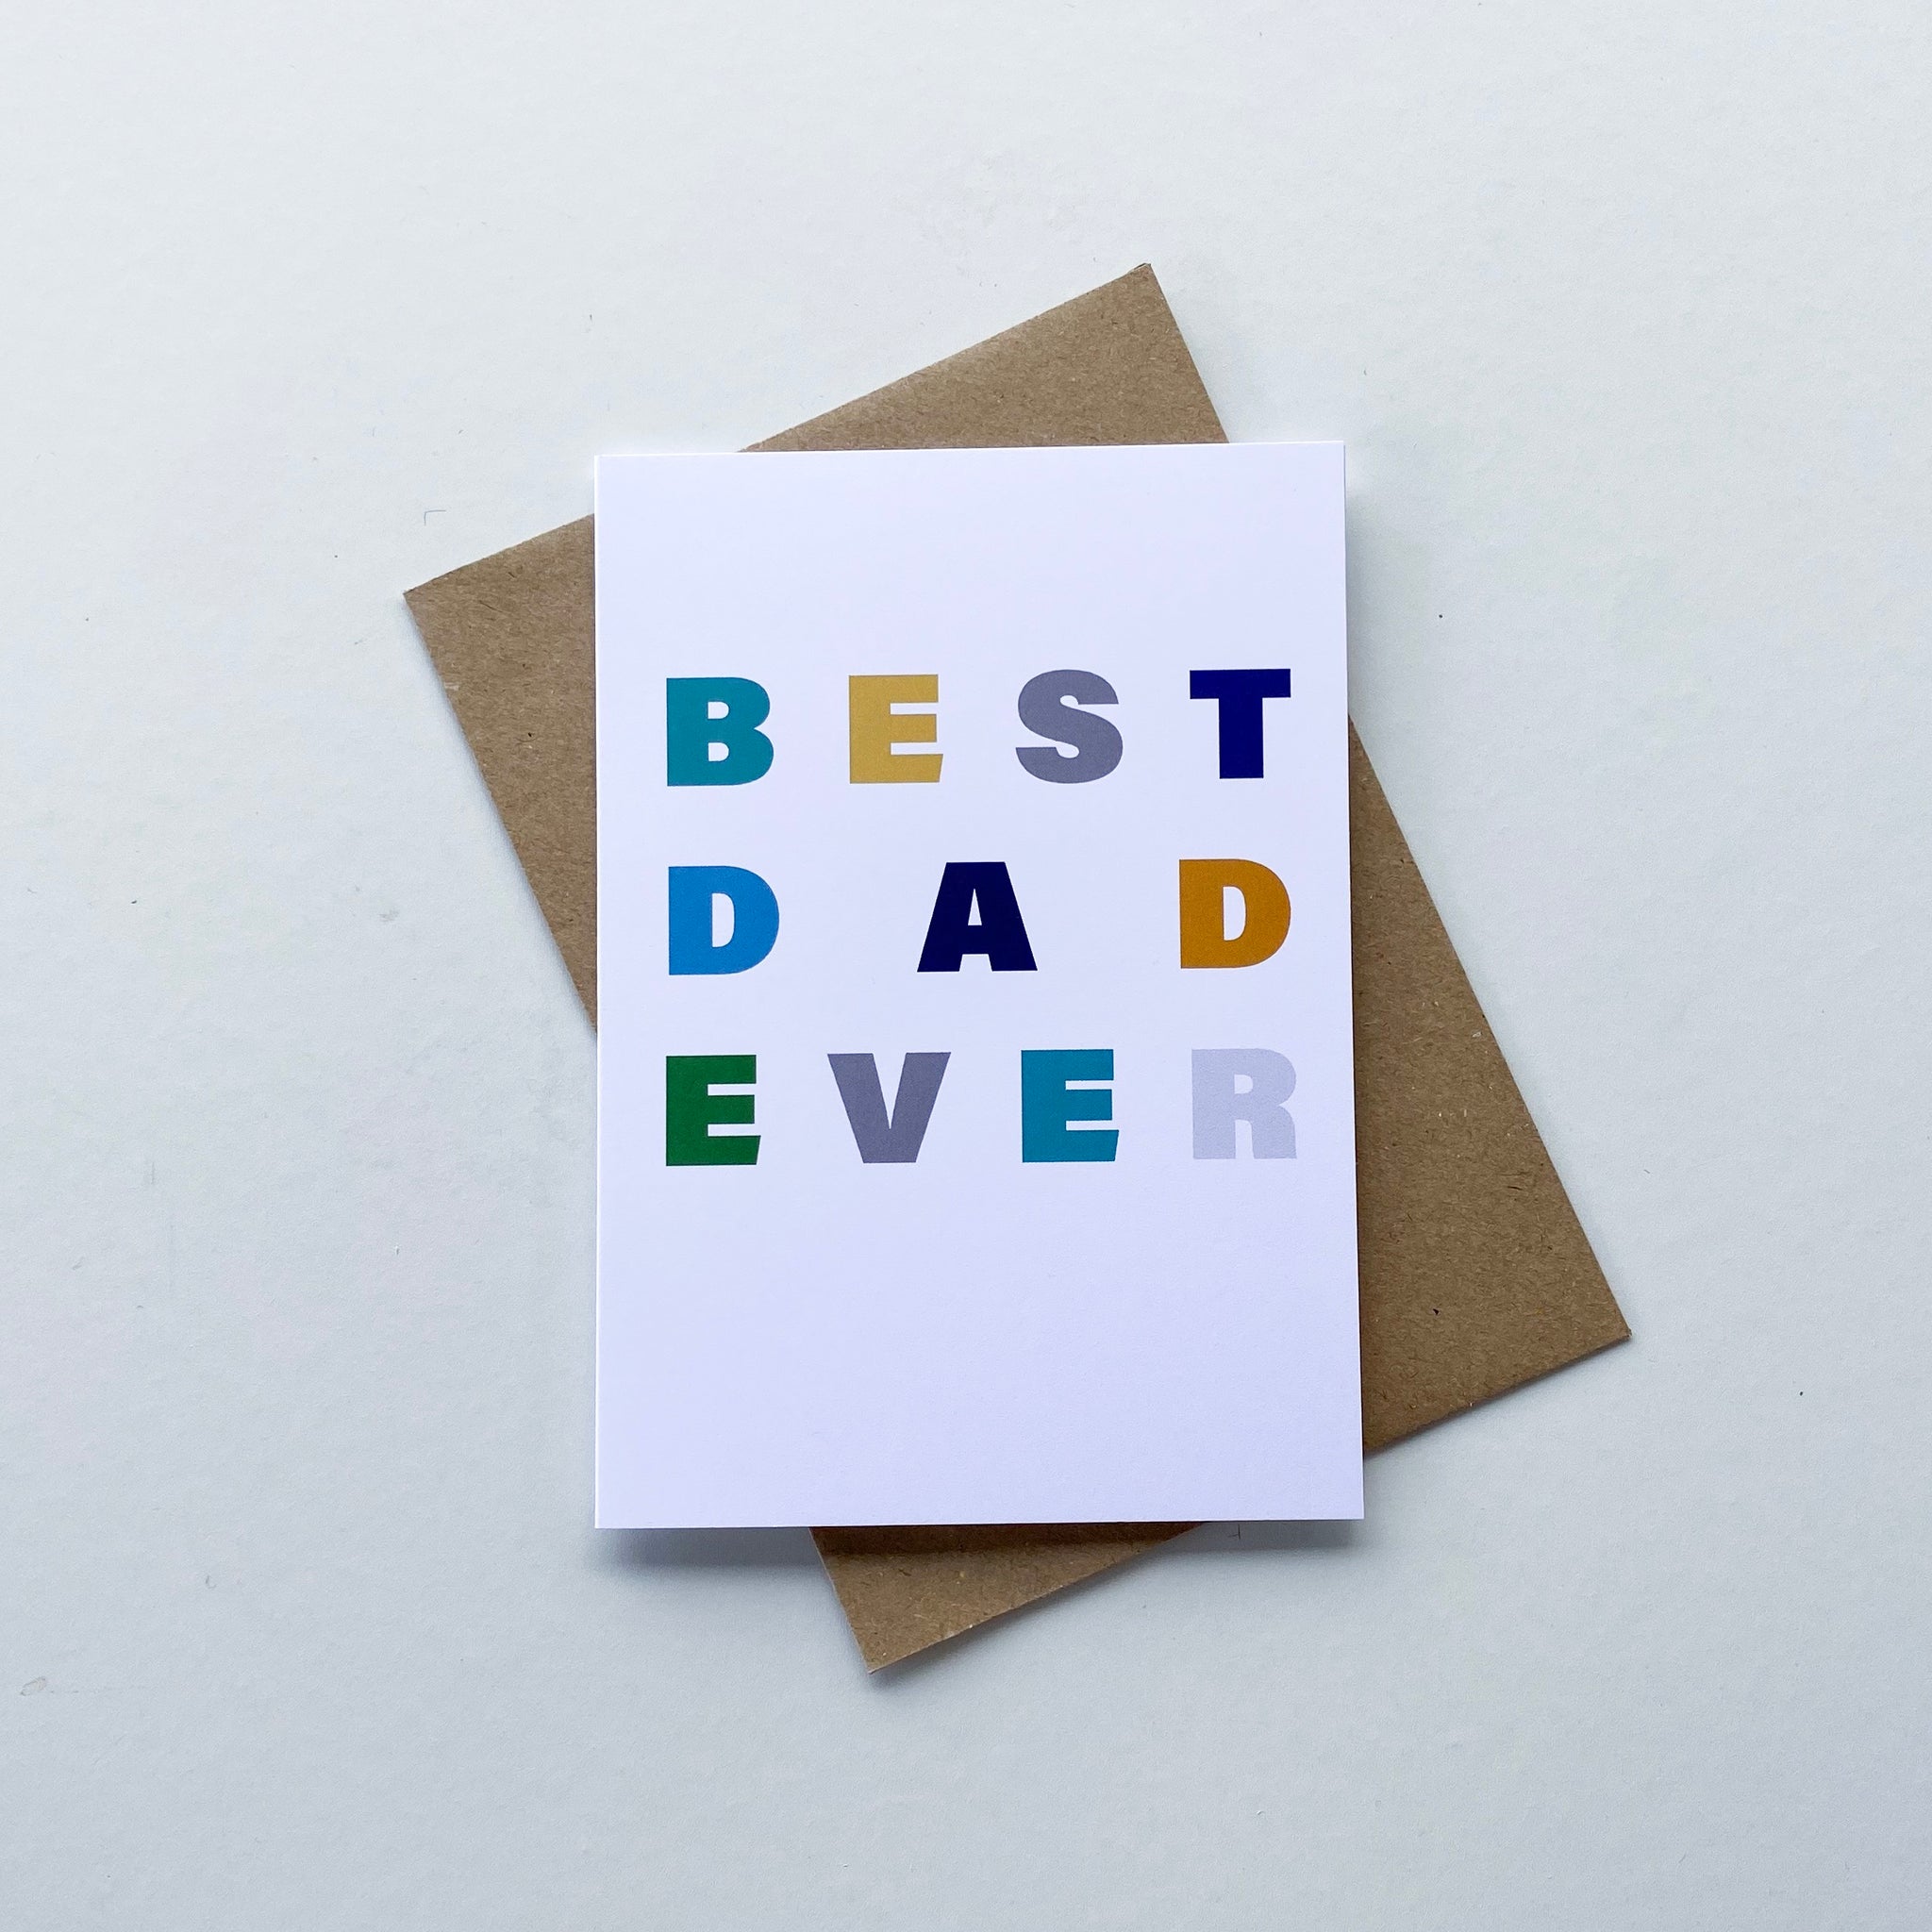 Best Dad Ever card